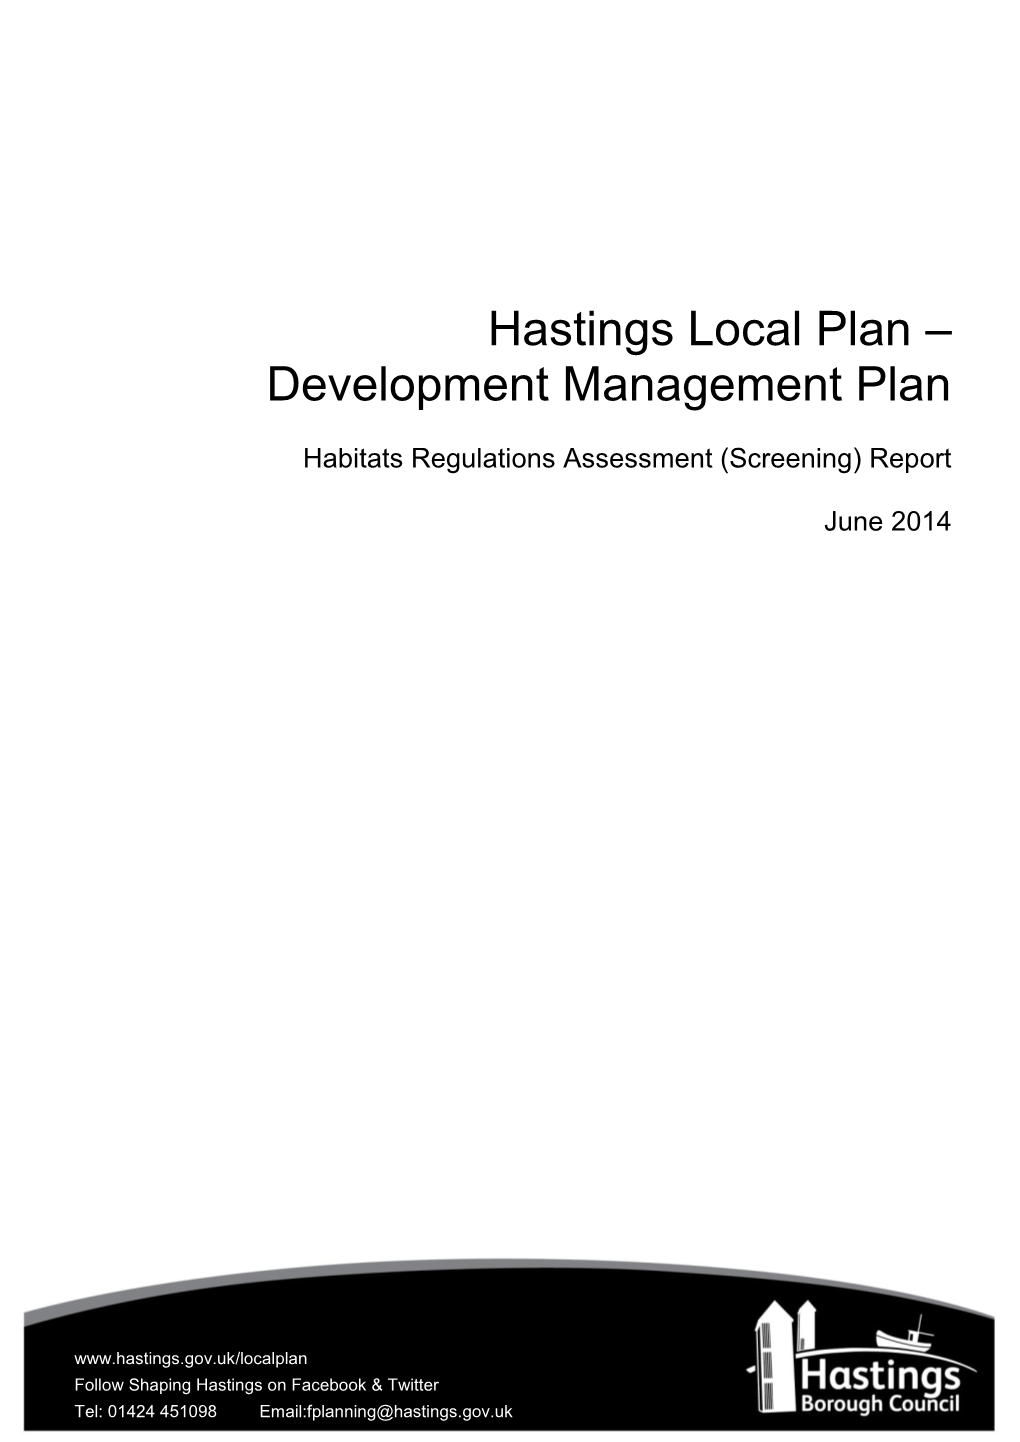 Habitats Regulations Assessment (Screening) Report